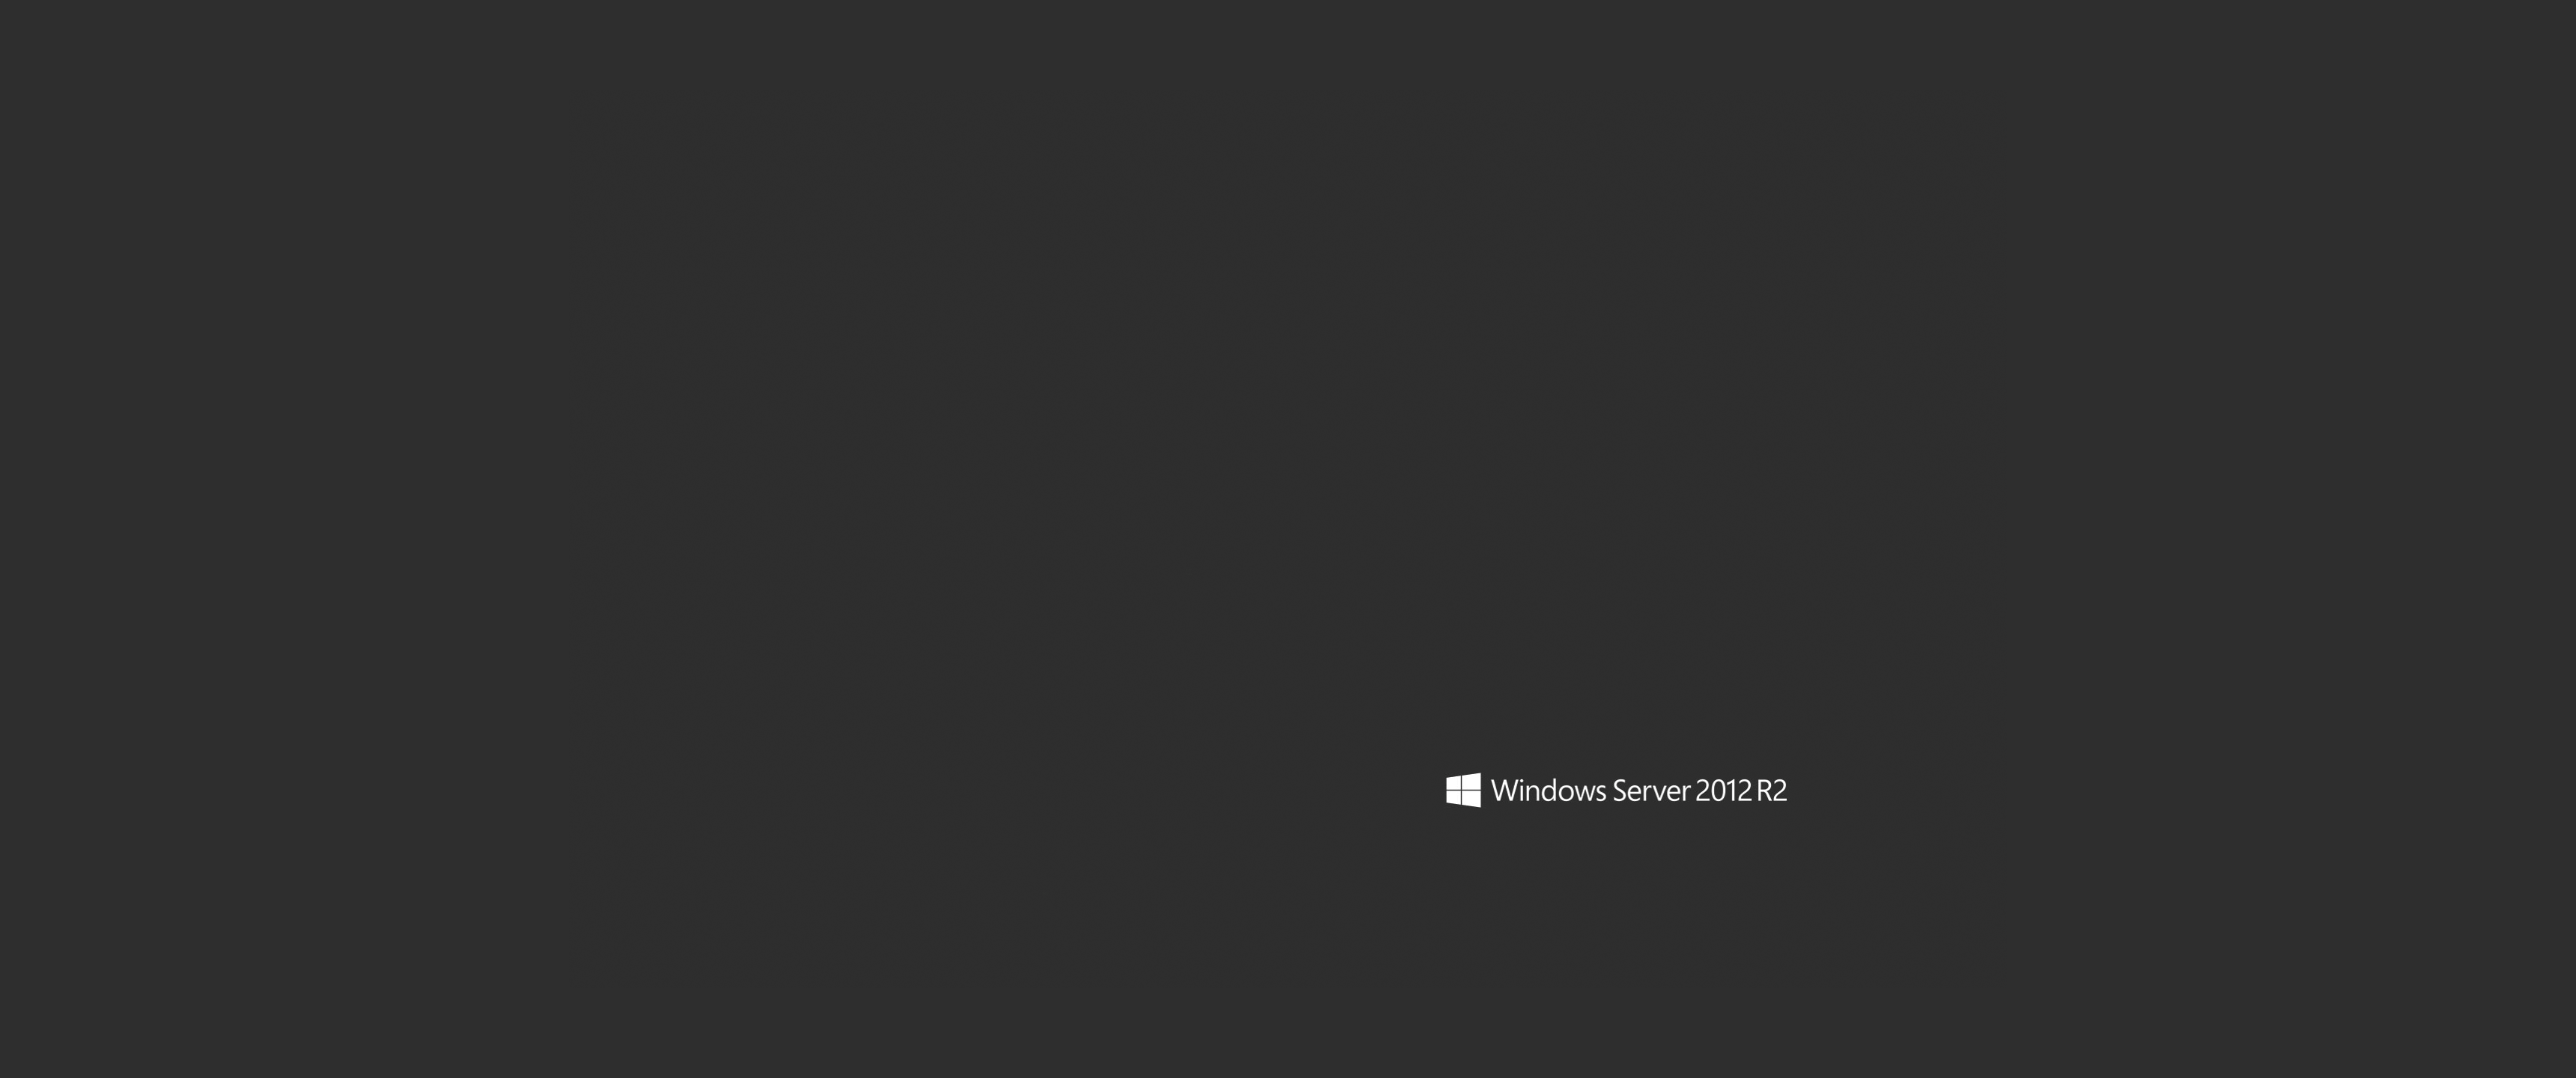 windows server 2012 r2 fondo de pantalla,negro,texto,marrón,fuente,cielo